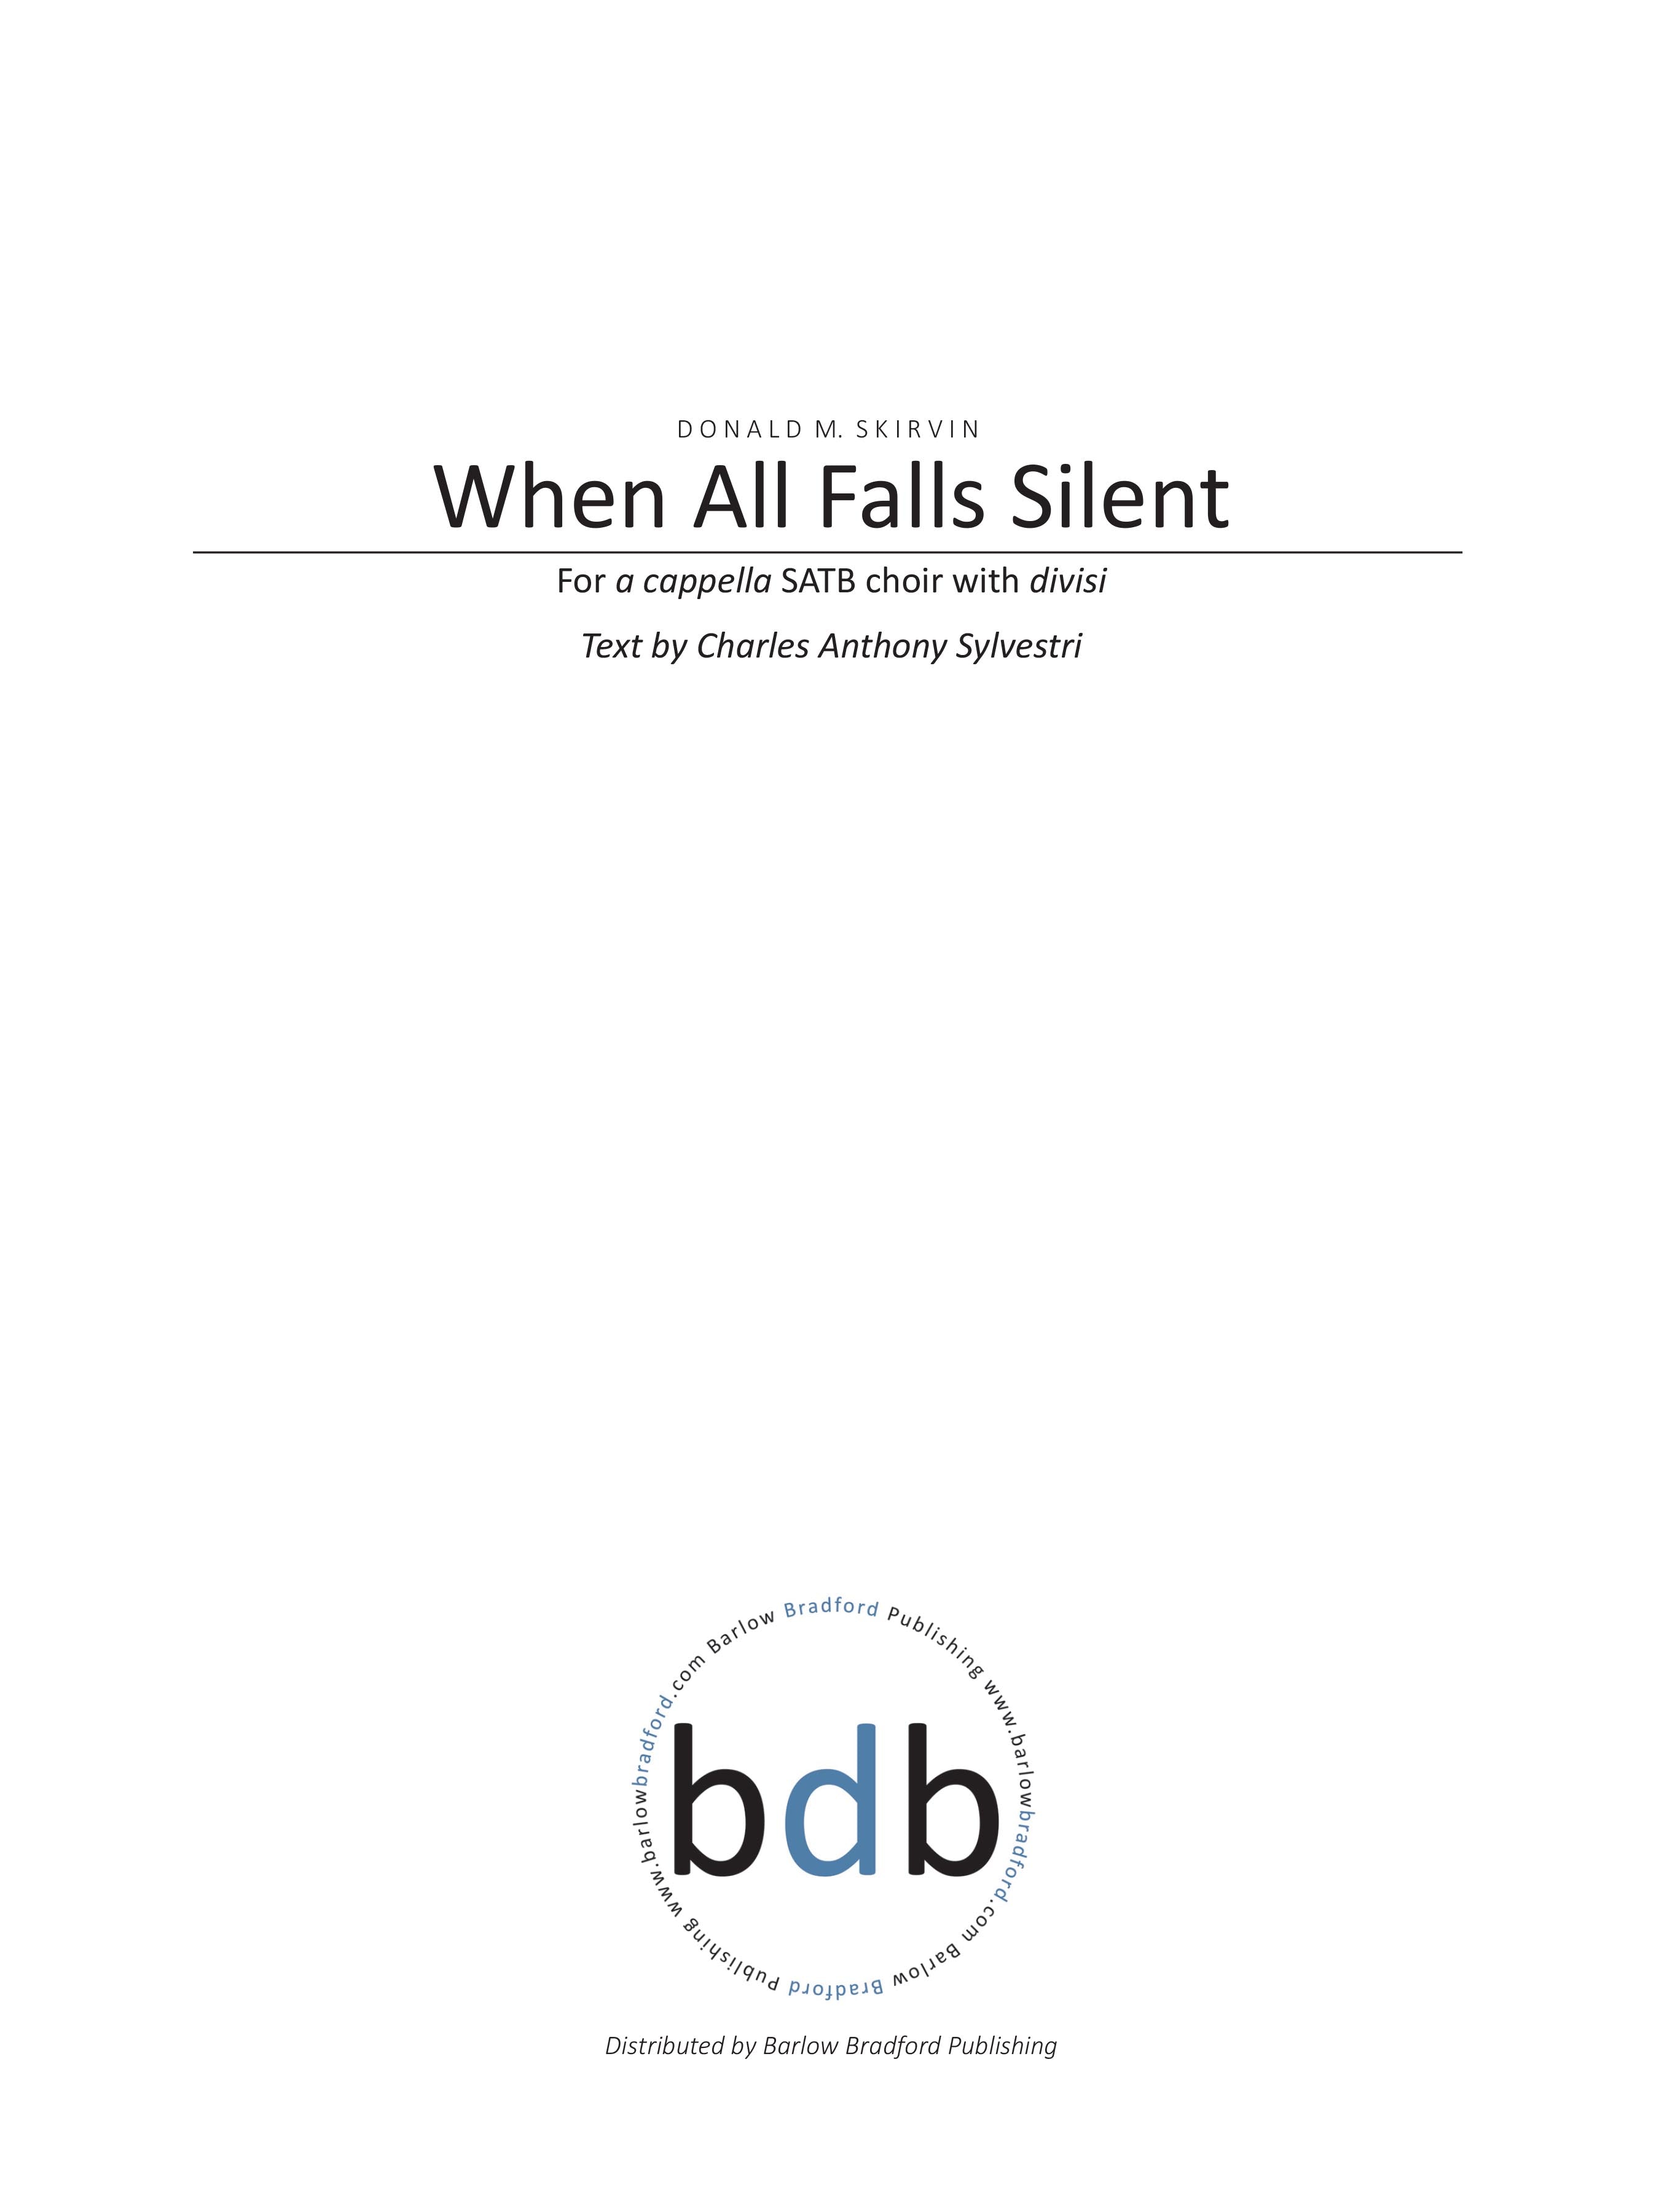 When All Falls Silent